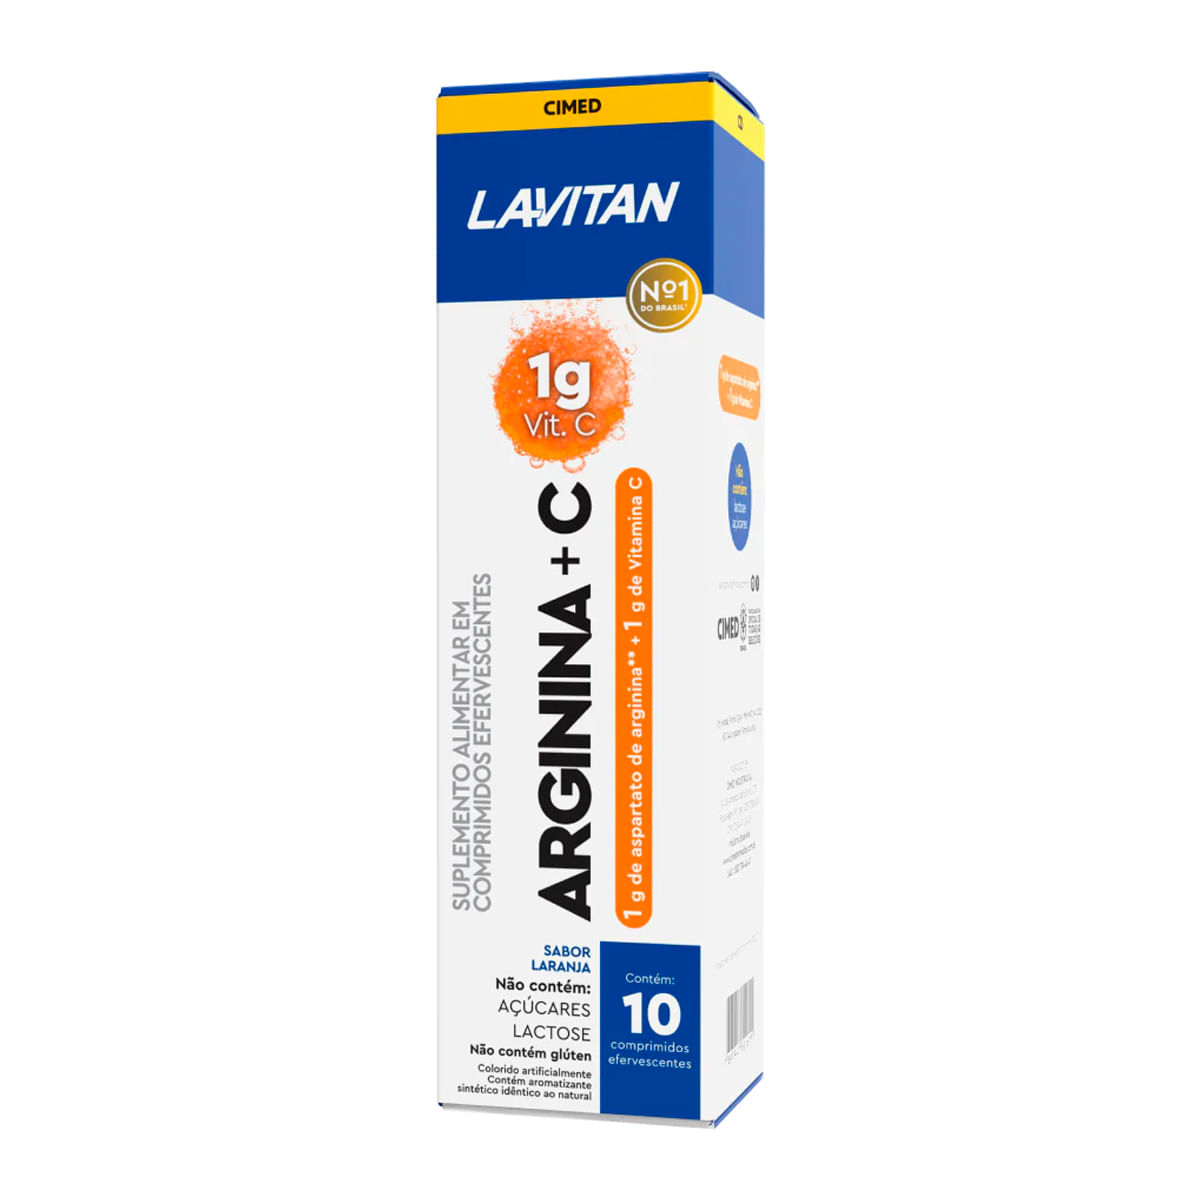 Lavitan Suplemento Alimentar Efervescente Arginina + C com 10 Comprimidos Cimed